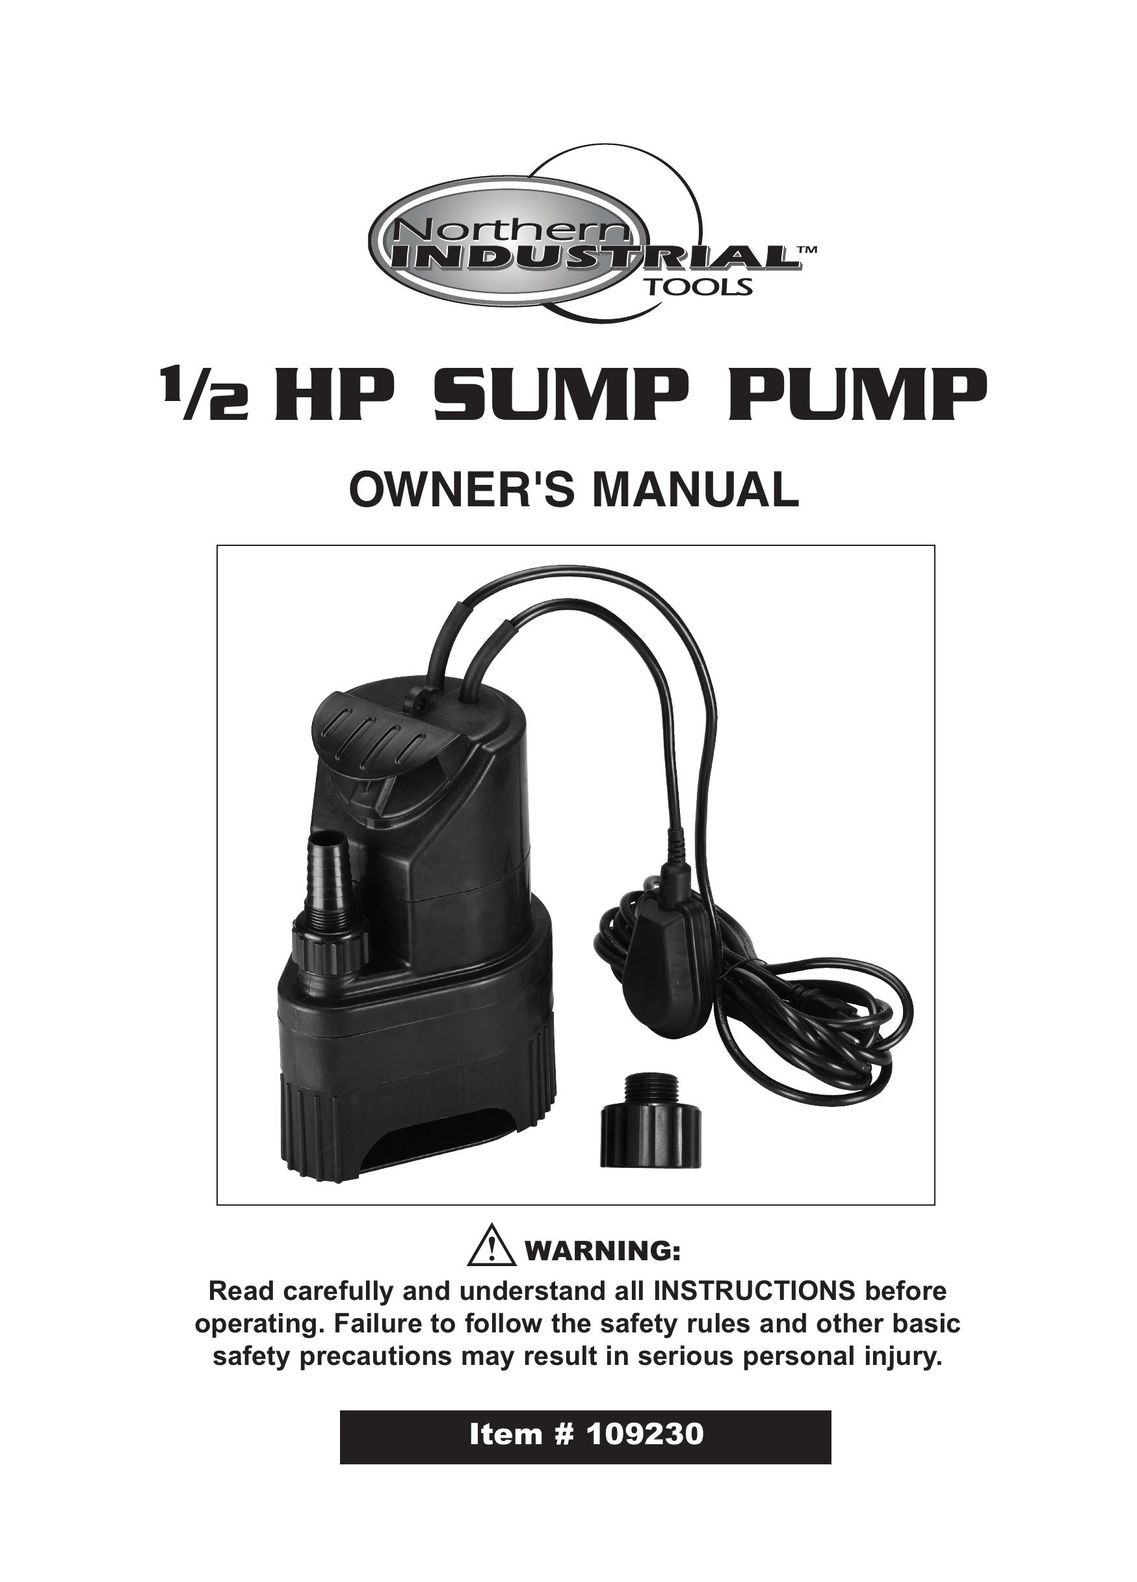 Northern Industrial Tools 1/2 HP SUMP PUMP Plumbing Product User Manual